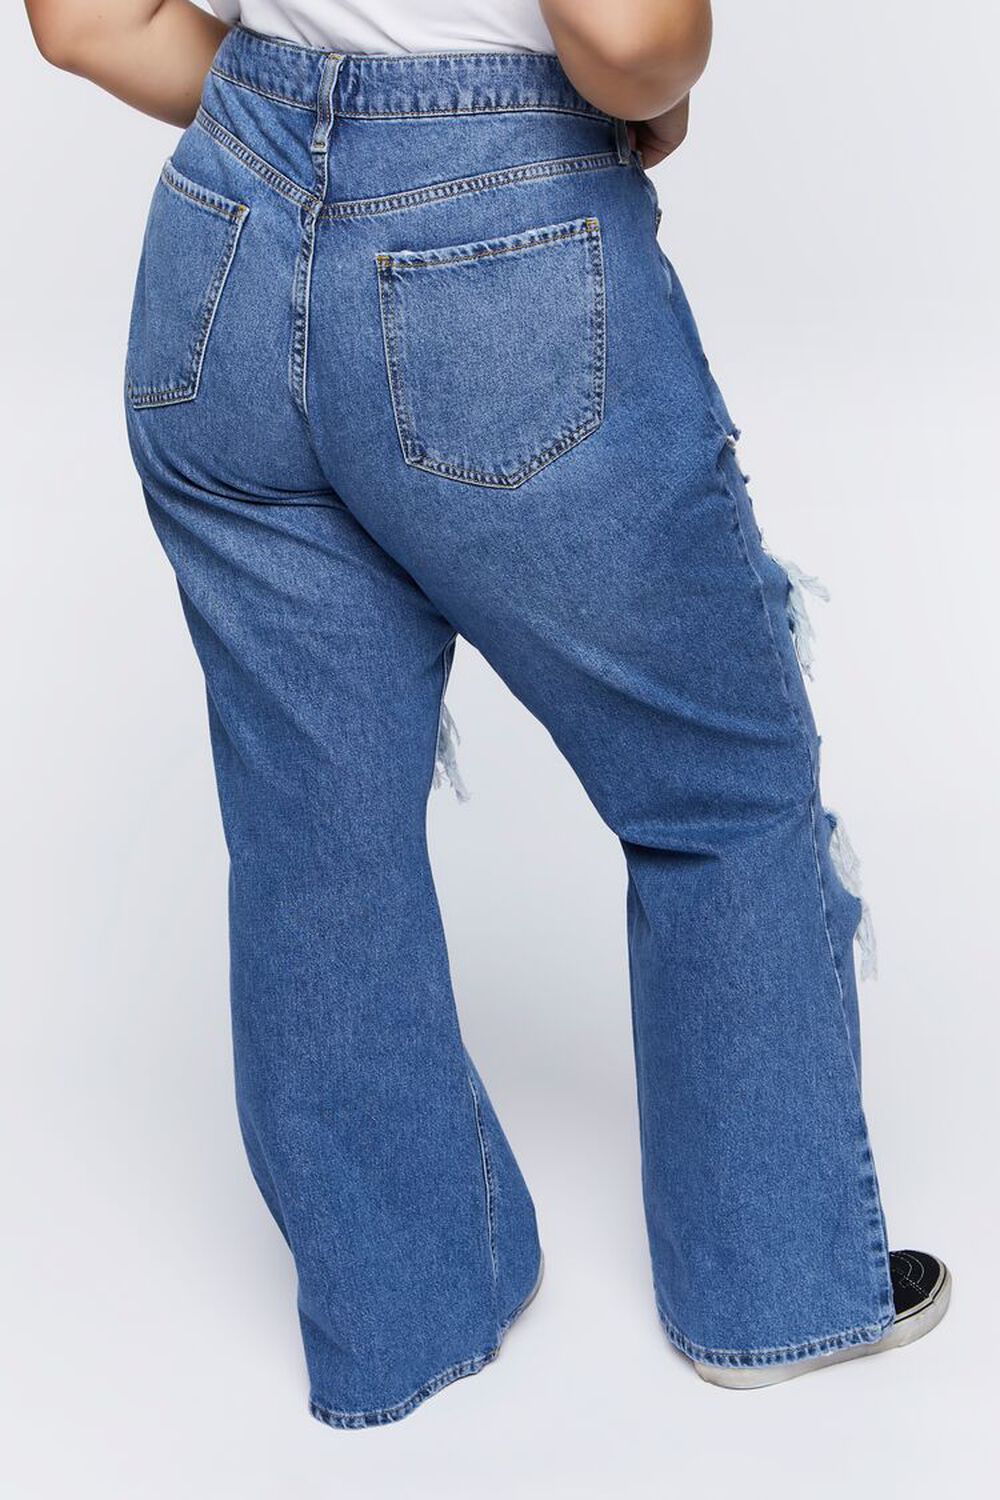 MEDIUM DENIM Plus Size Destroyed Mid-Rise Flare Jeans, image 3